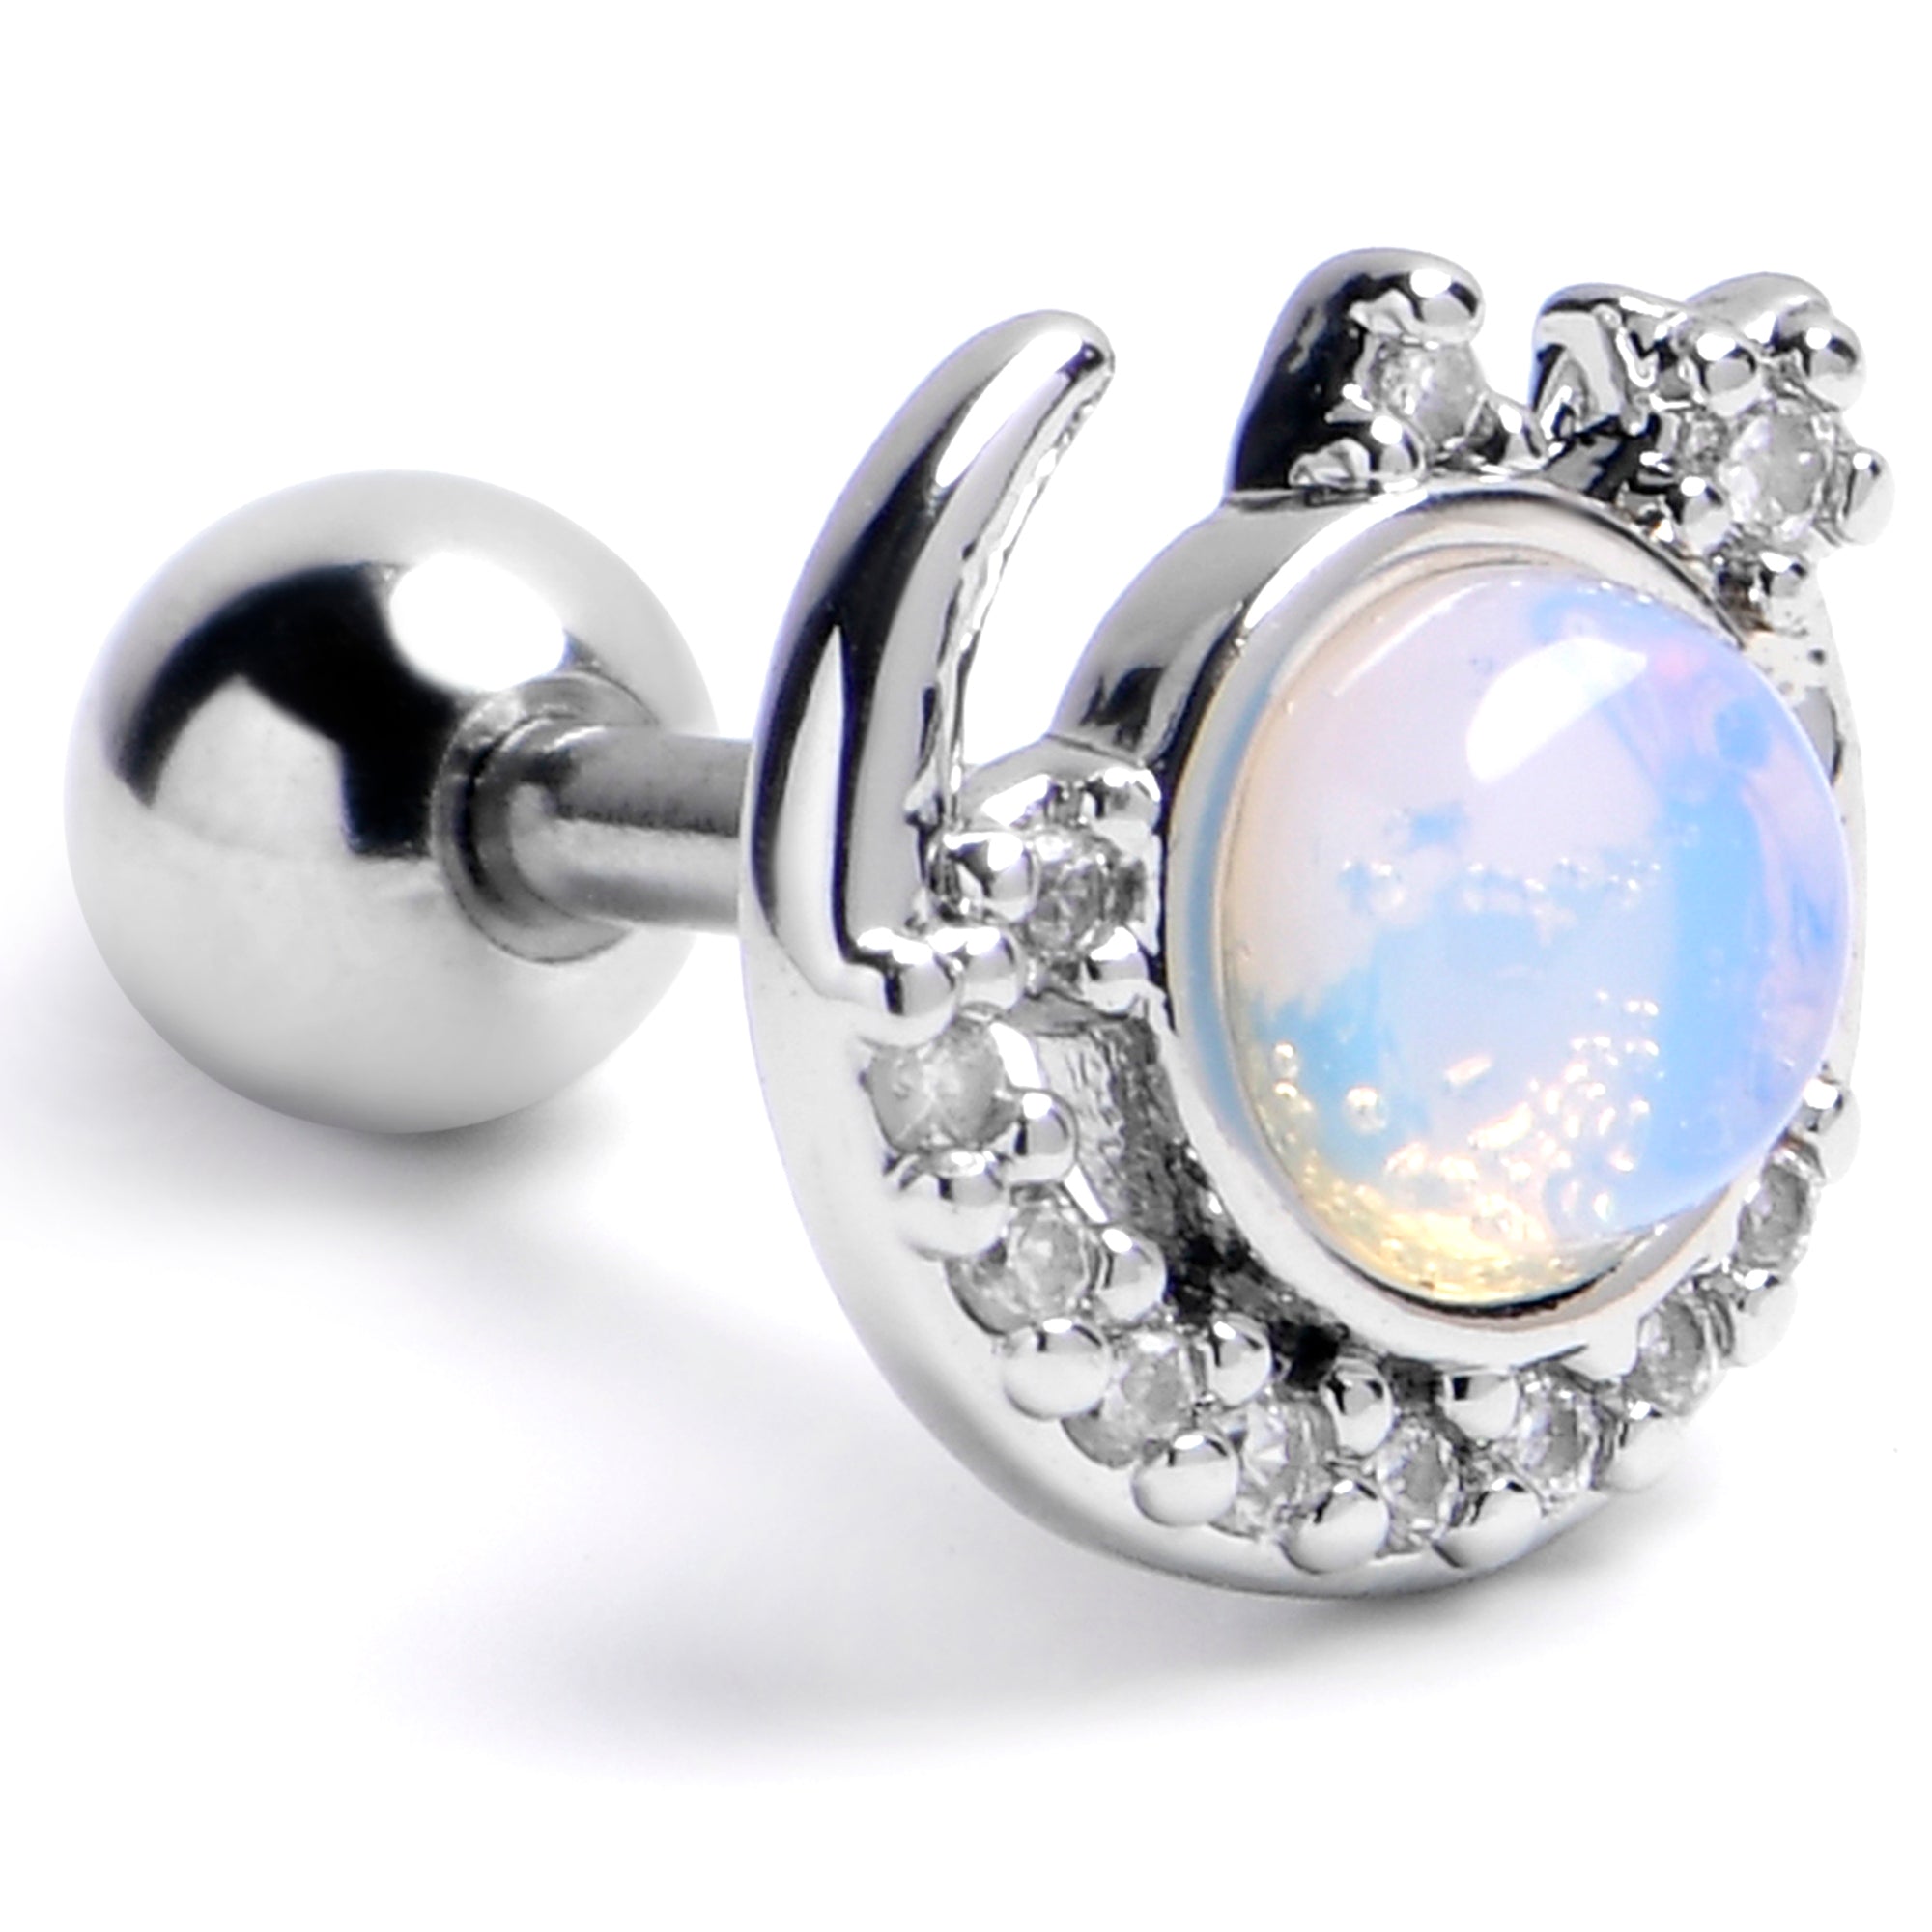 16 Gauge 1/4 Blue Faux Opal Crescent Moon Heavenly Cartilage Earring